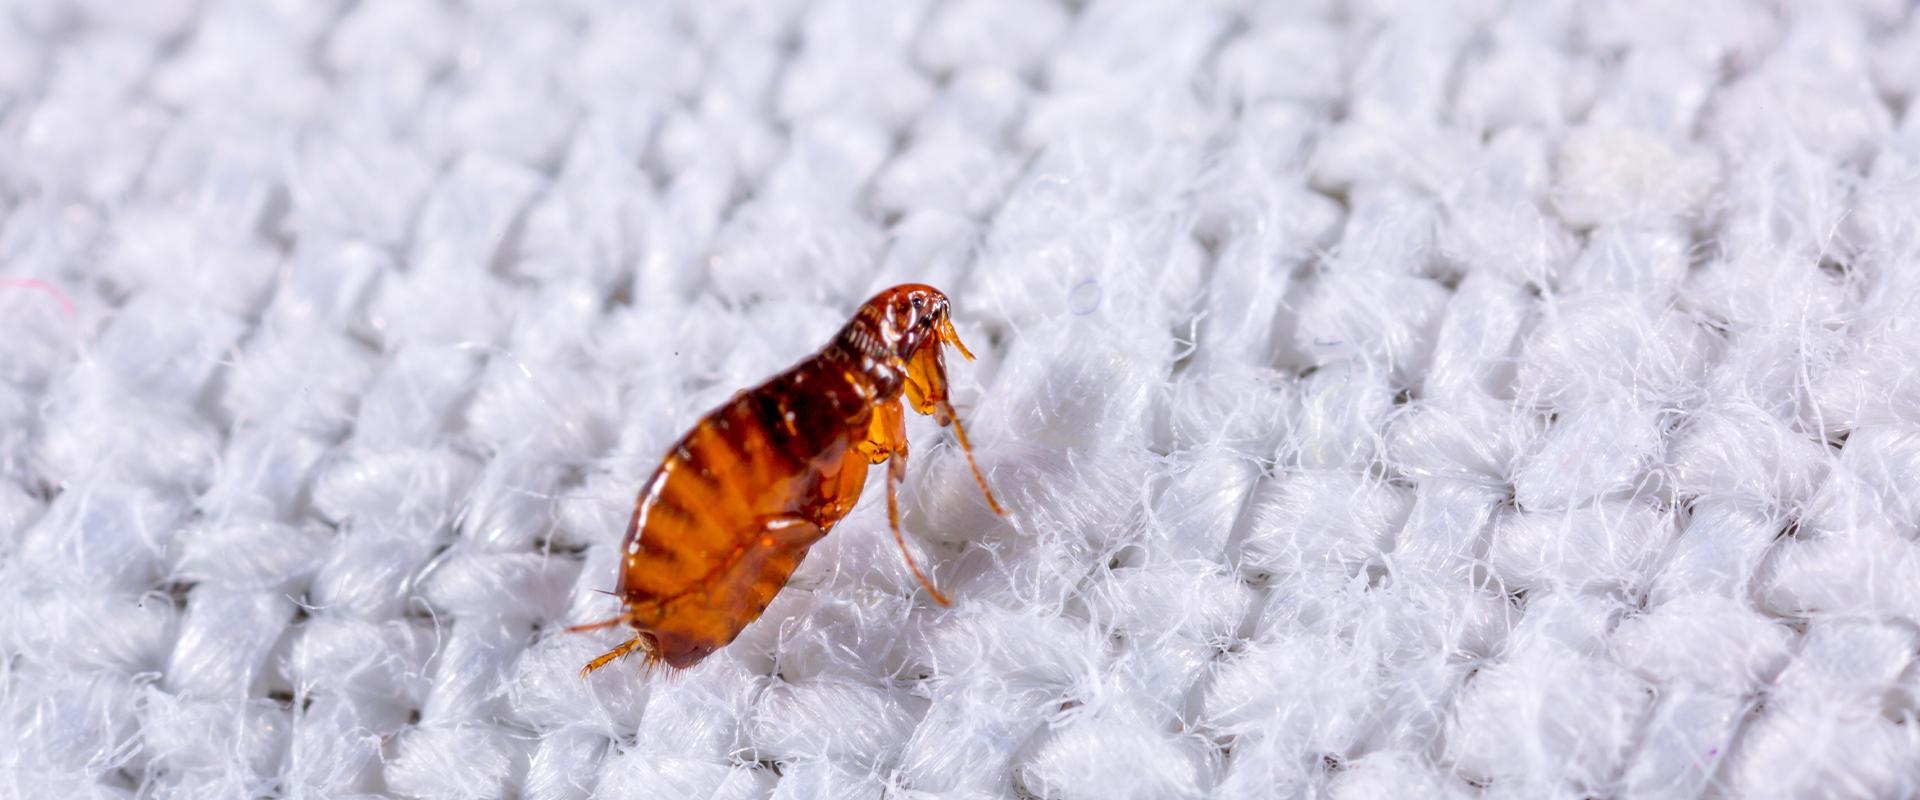 a flea on a mattress